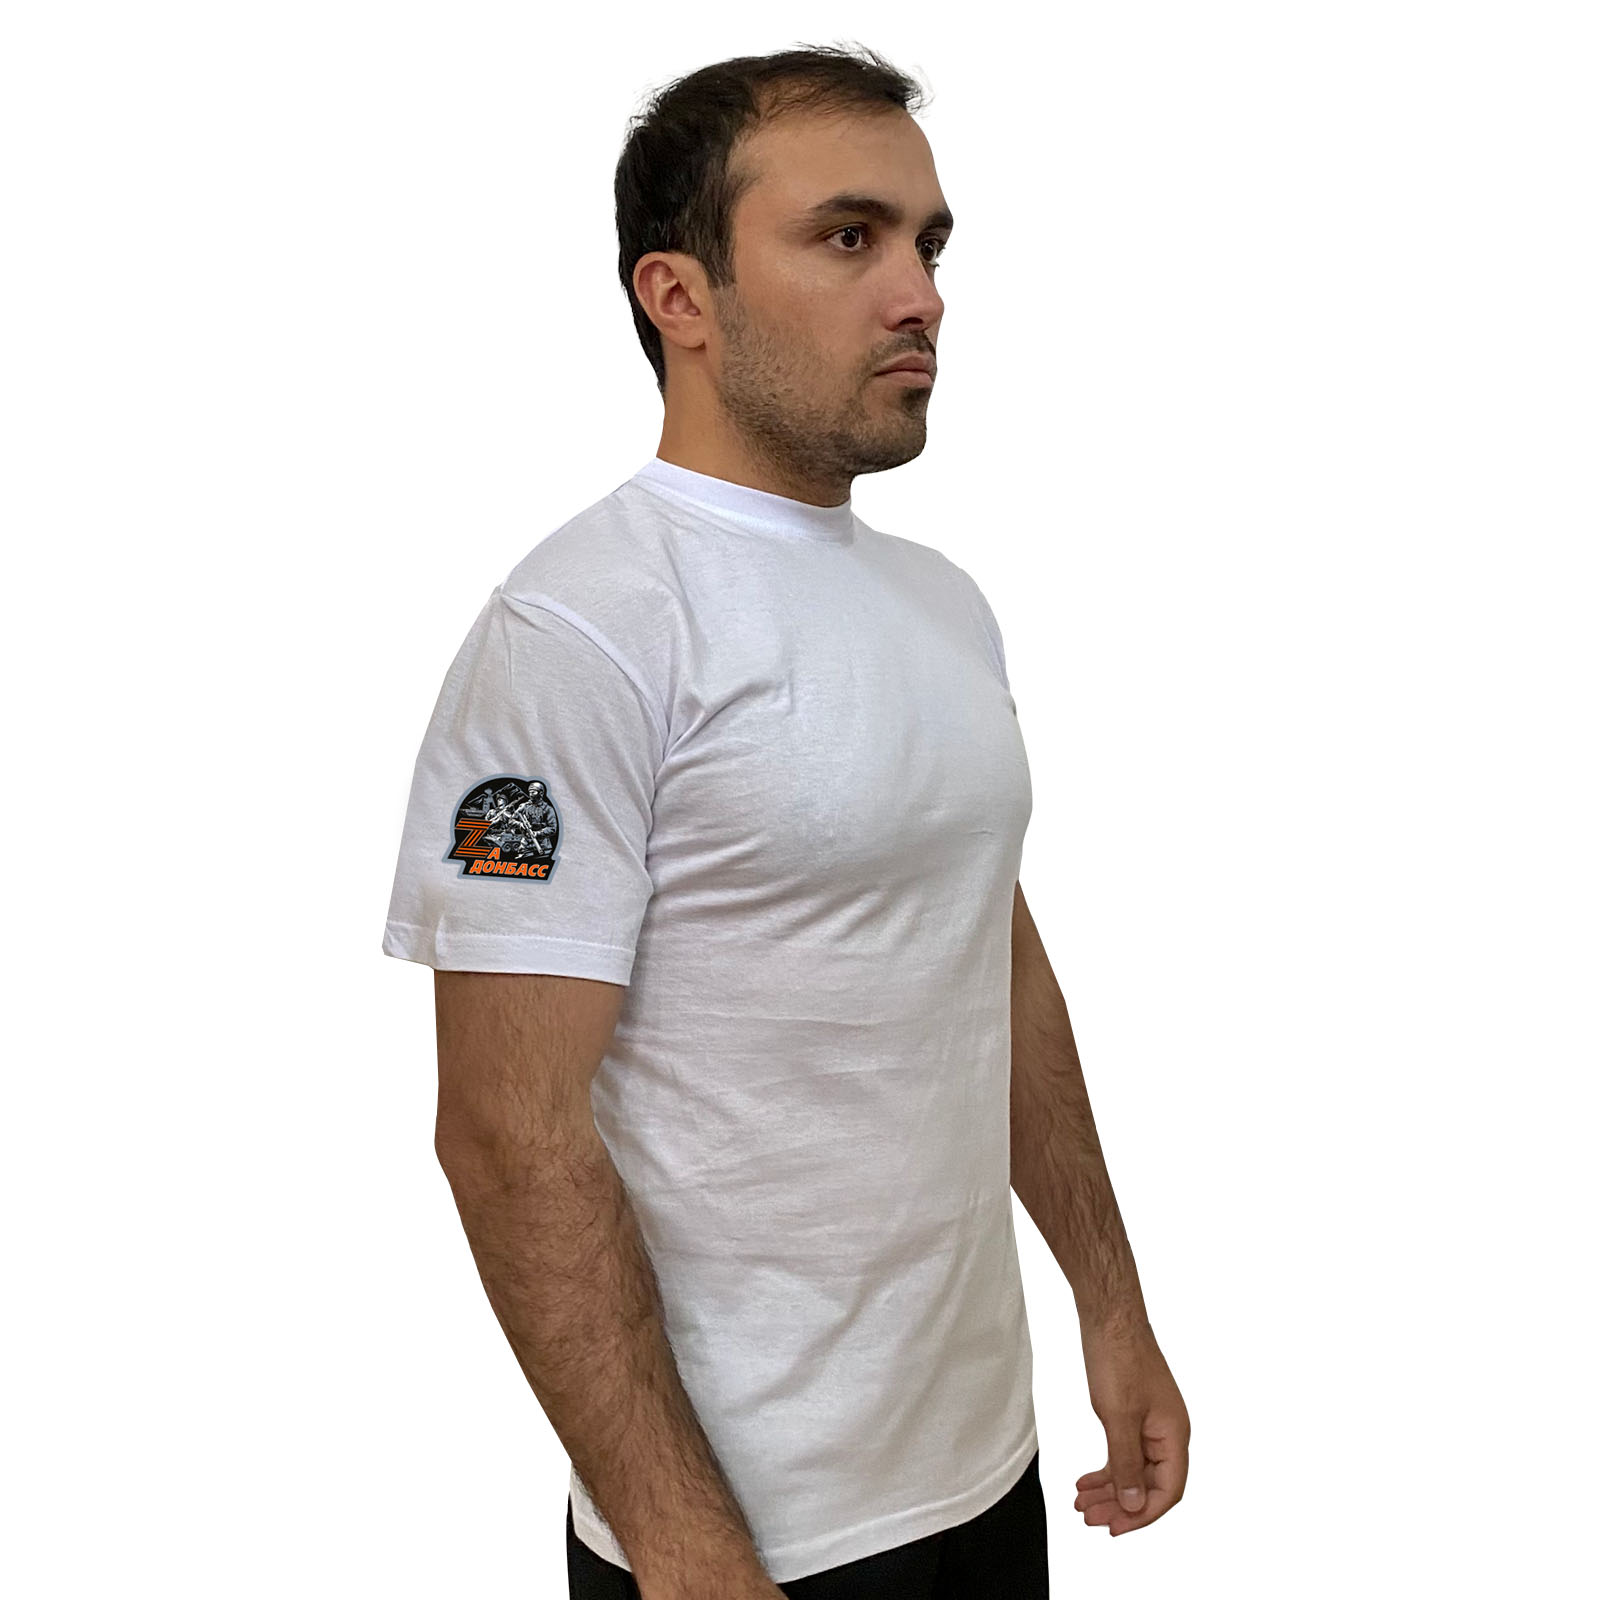 Белая футболка "Zа Донбасс" с трансфером на рукаве